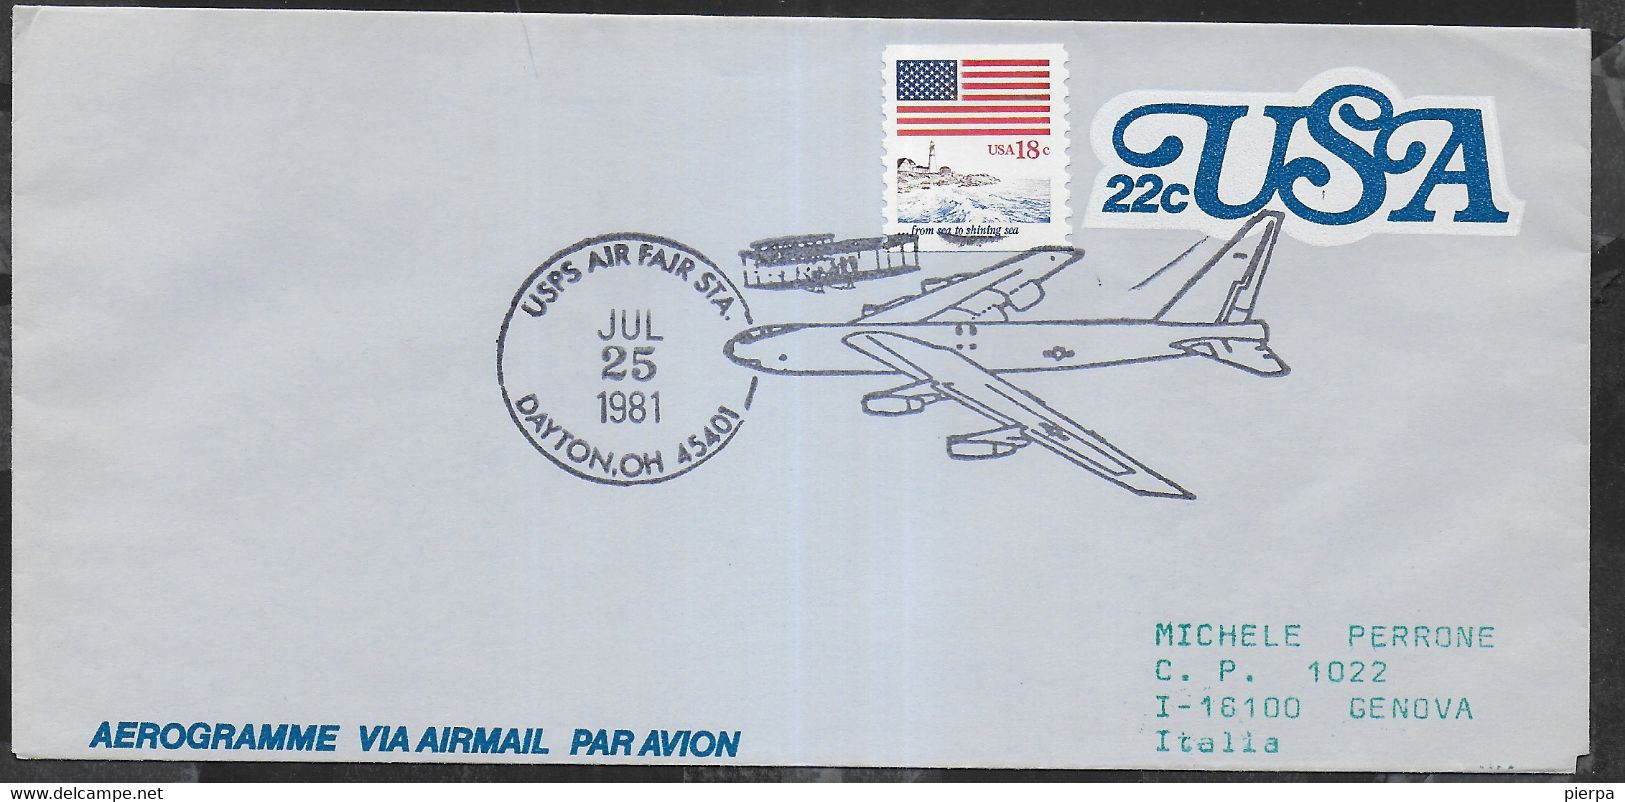 U.S.A. - ANNULLO SPECIALE " USPS AIR FAIR STA. *JUL 25 1981* DAYTON, OH 45401 " SU AEROGRAMMA VIAGGIATO - Cartas & Documentos